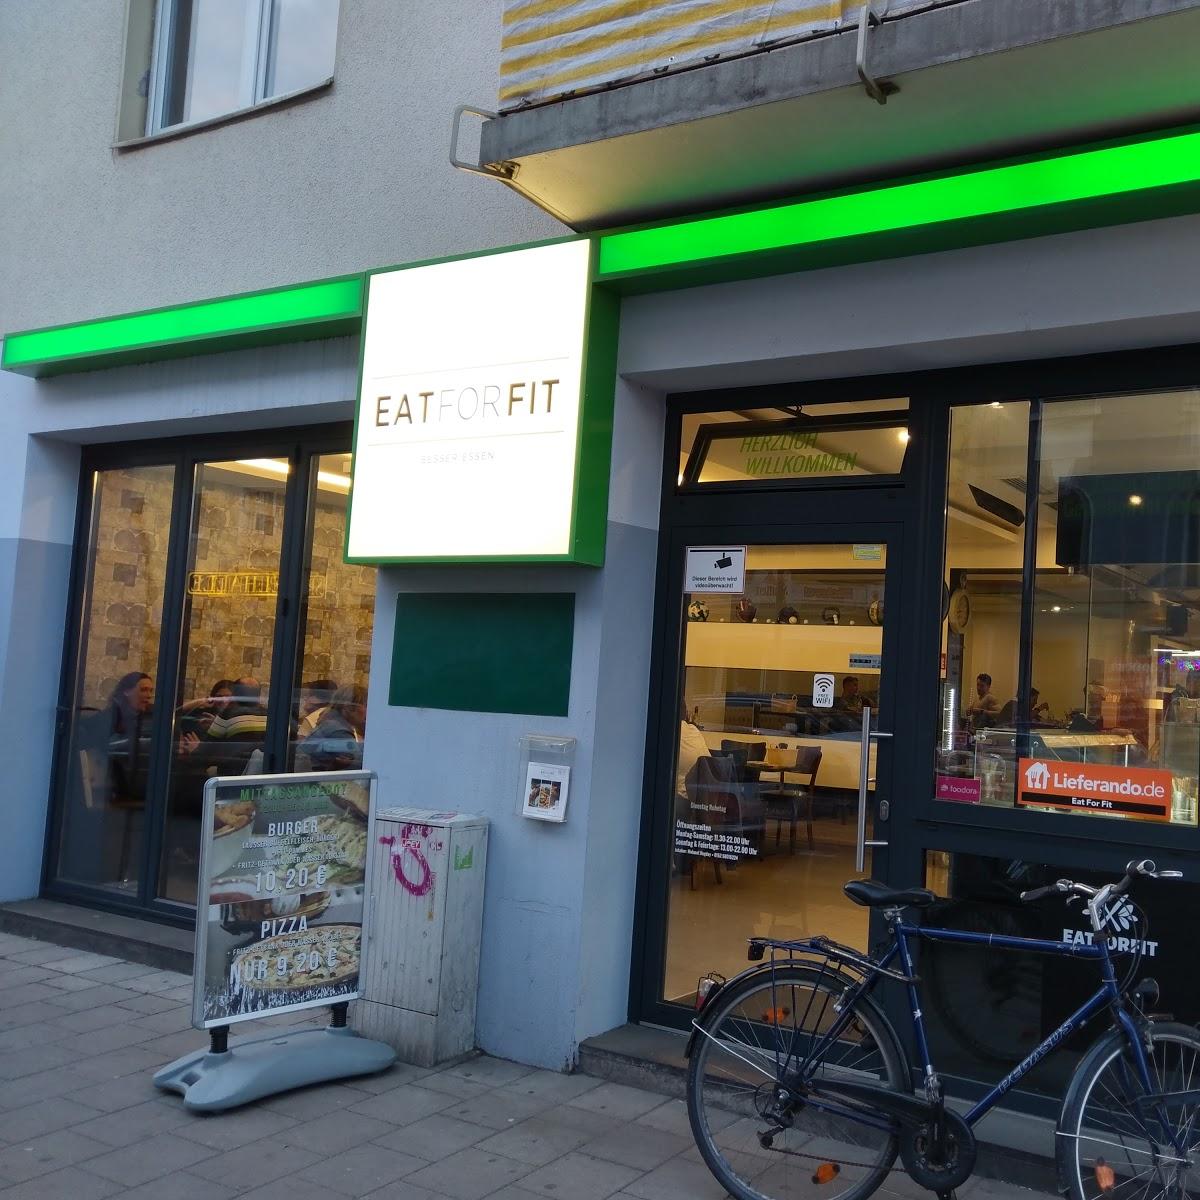 Restaurant "EATFORFIT" in Köln